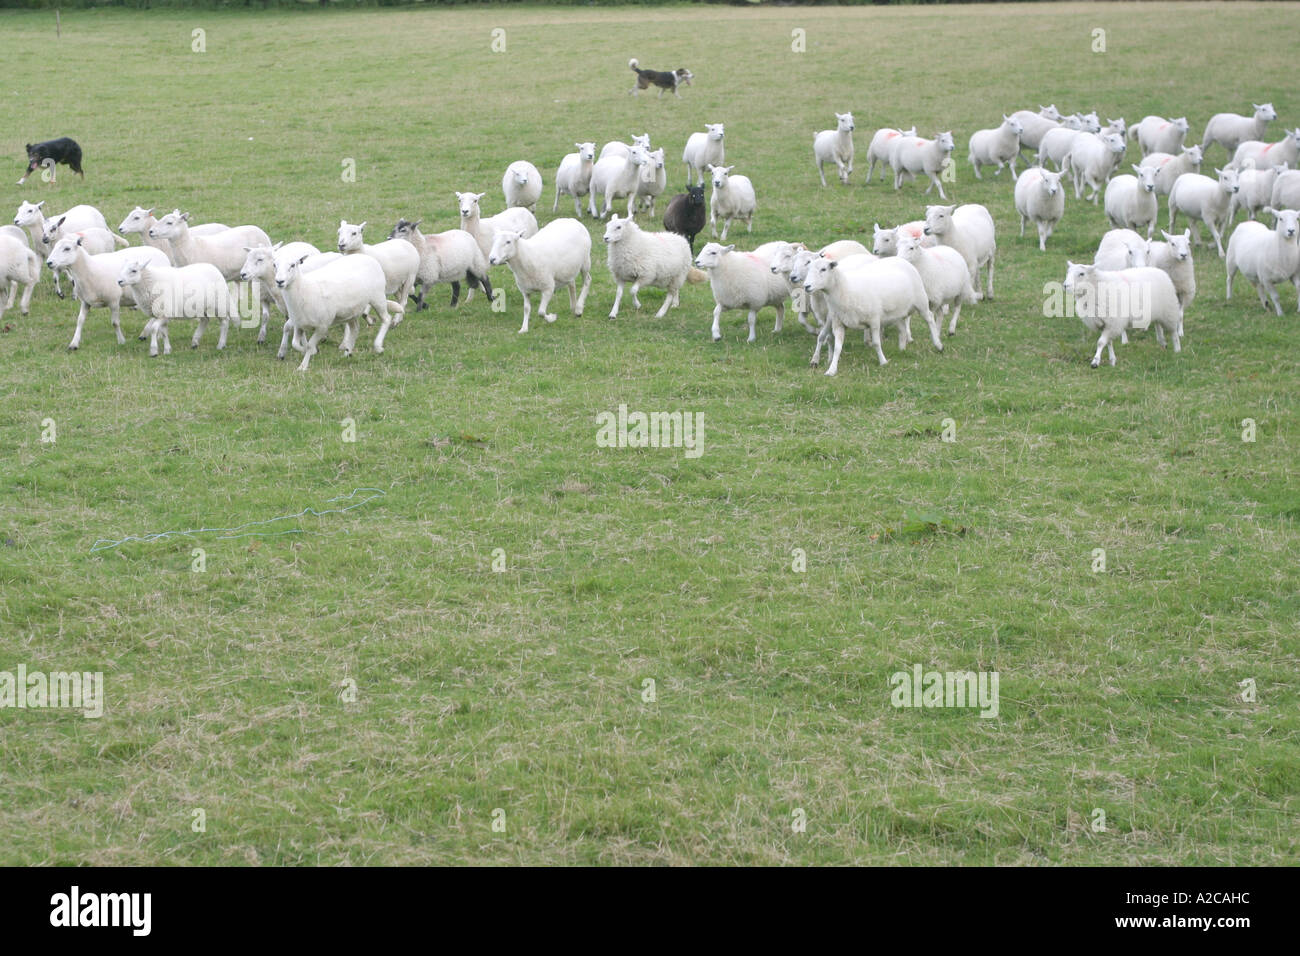 Rounding up the sheep Stock Photo